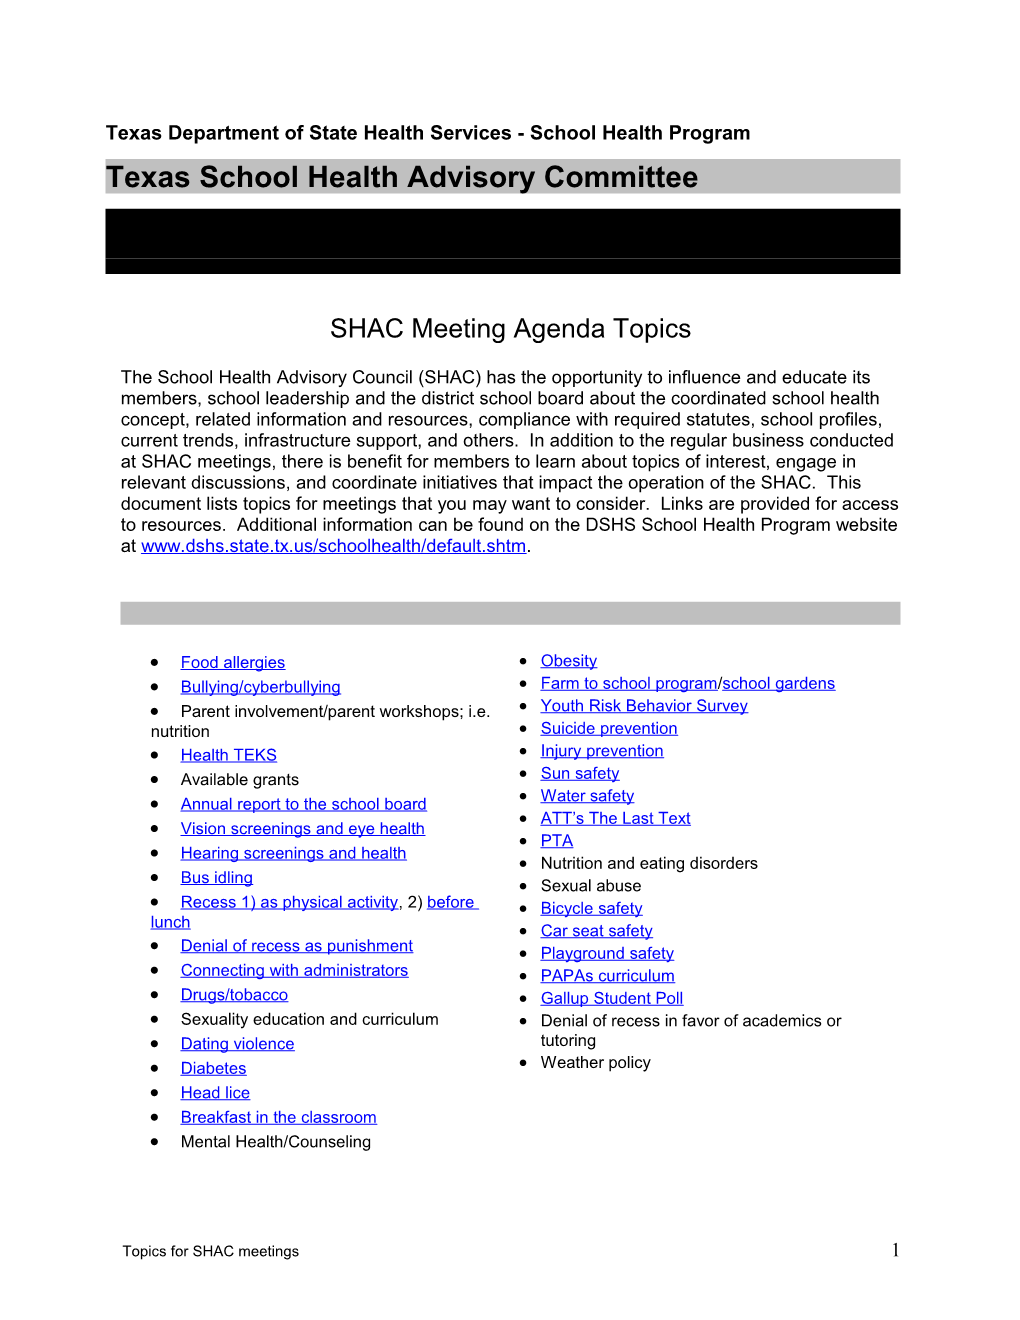 SHAC Meeting Agenda Topics